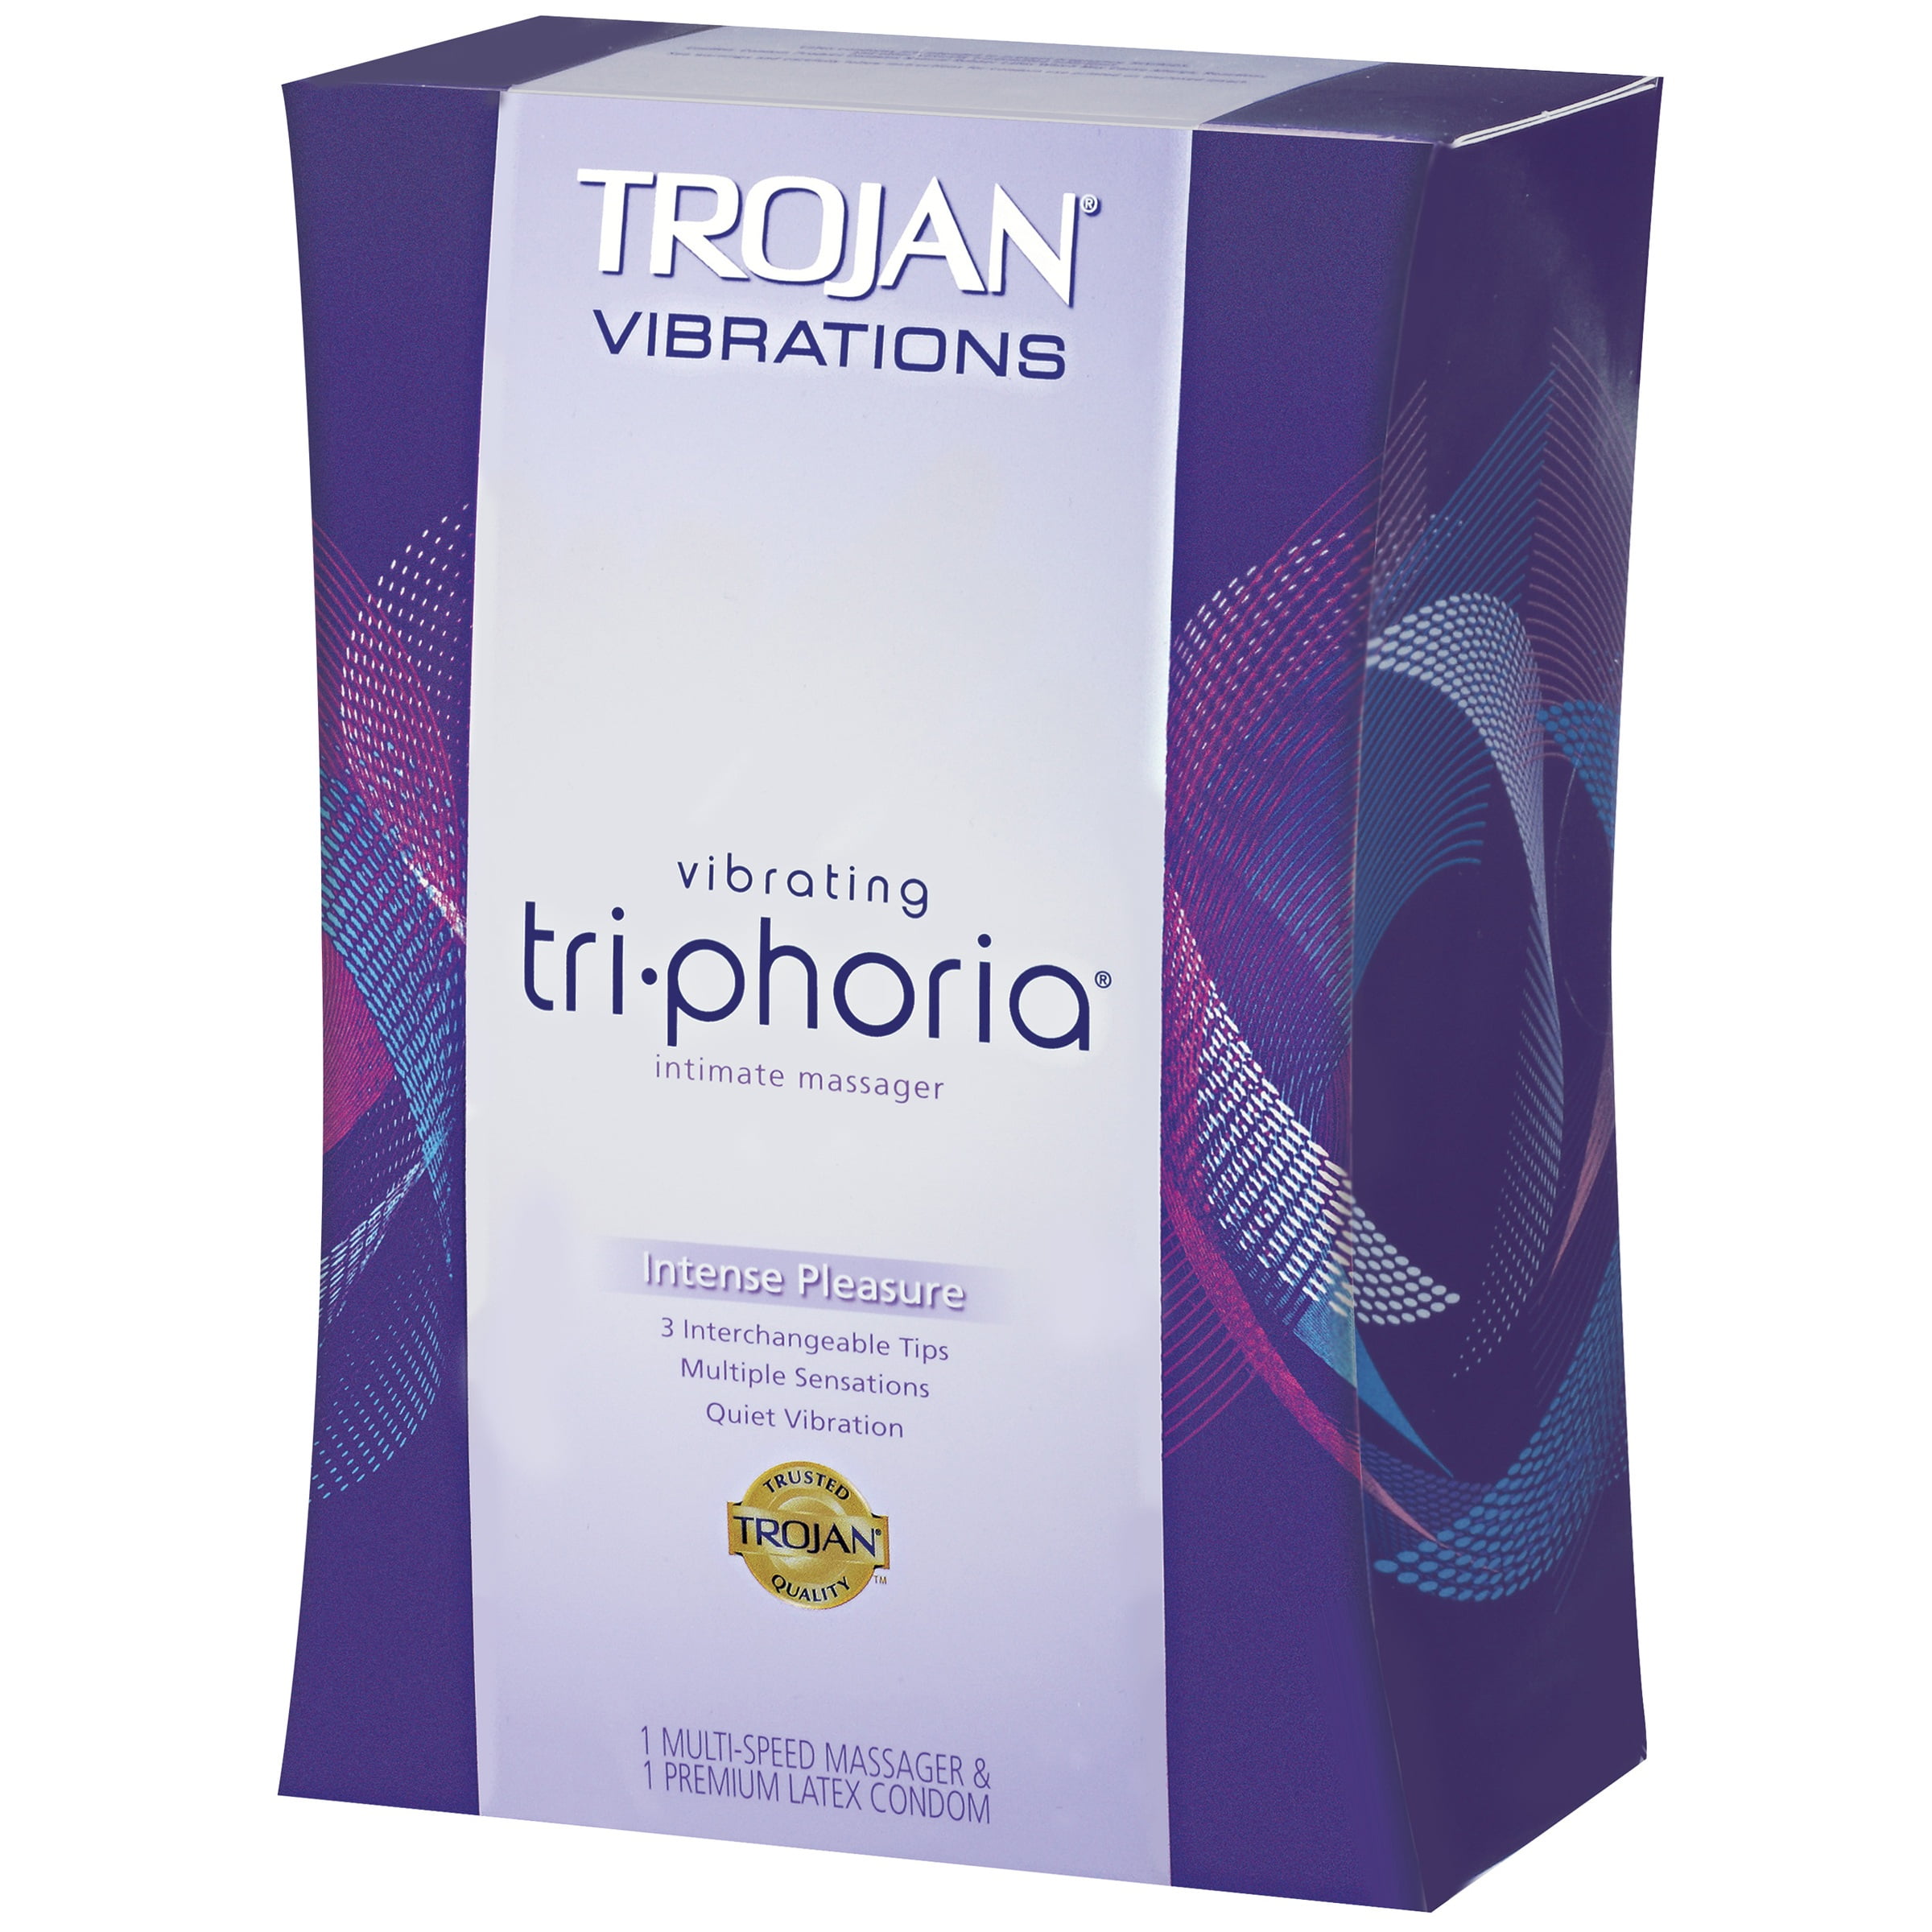 catherine hession recommends Trojan Vibrations Tri Phoria